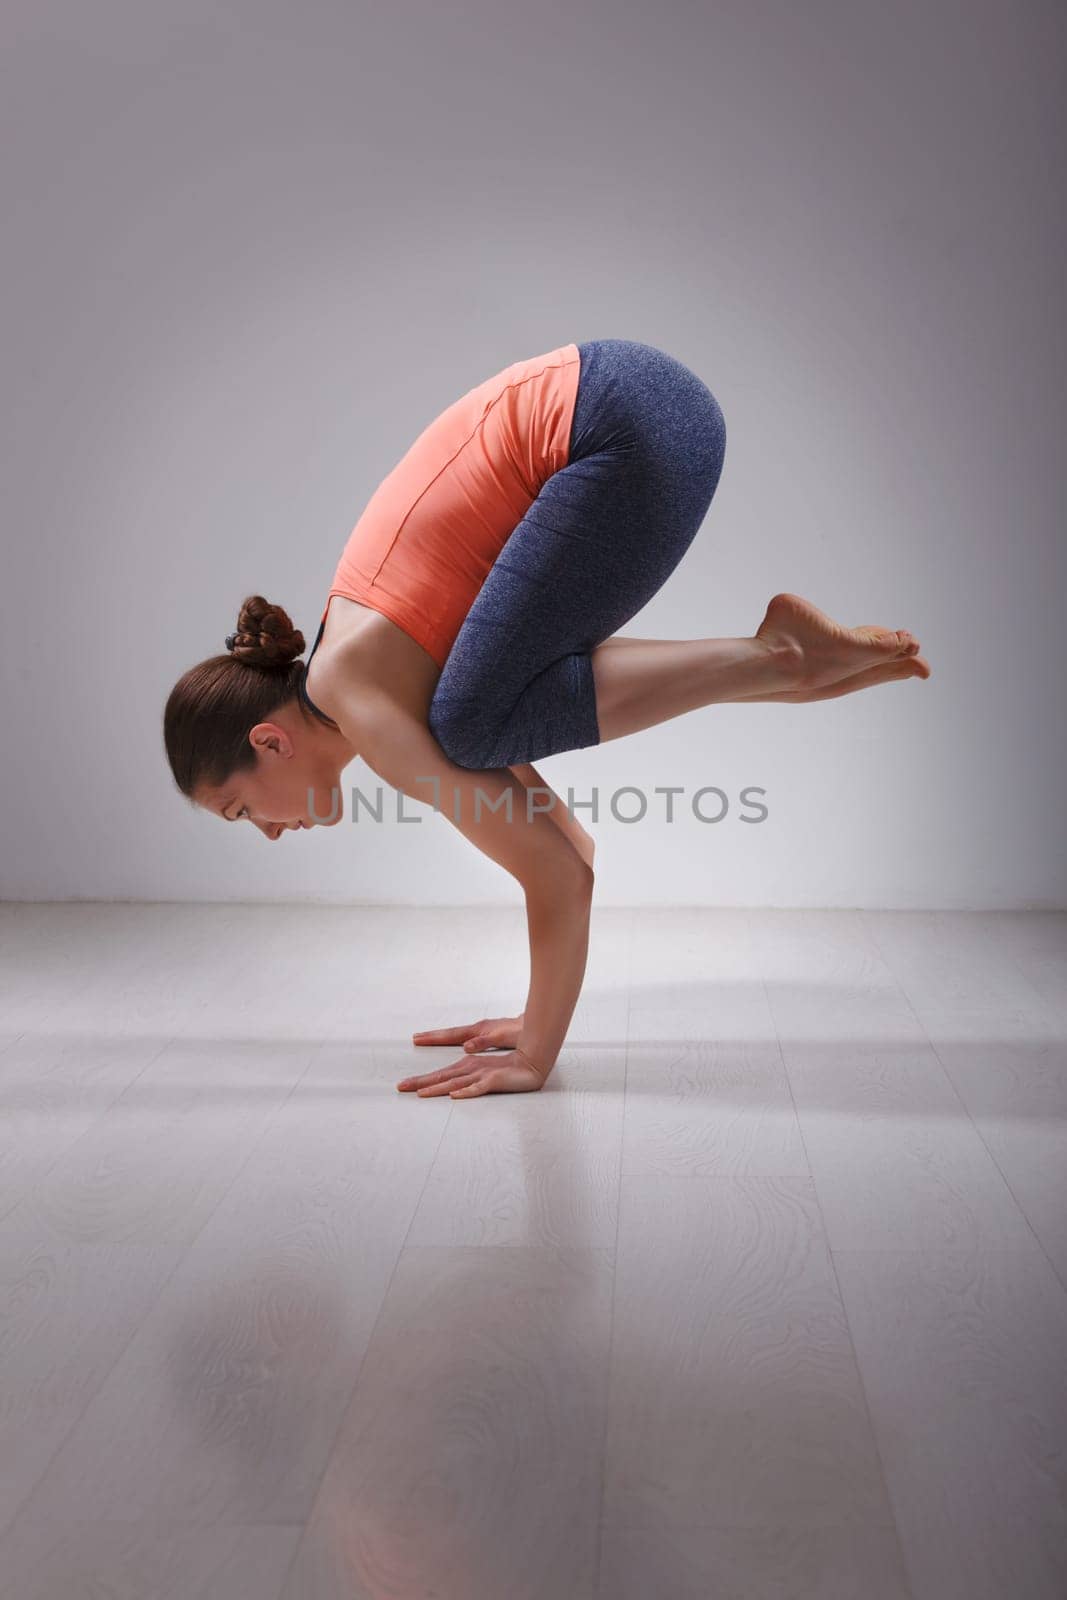 Beautiful sporty fit yogini woman practices yoga asana Bakasana - crane pose arm balance in studio